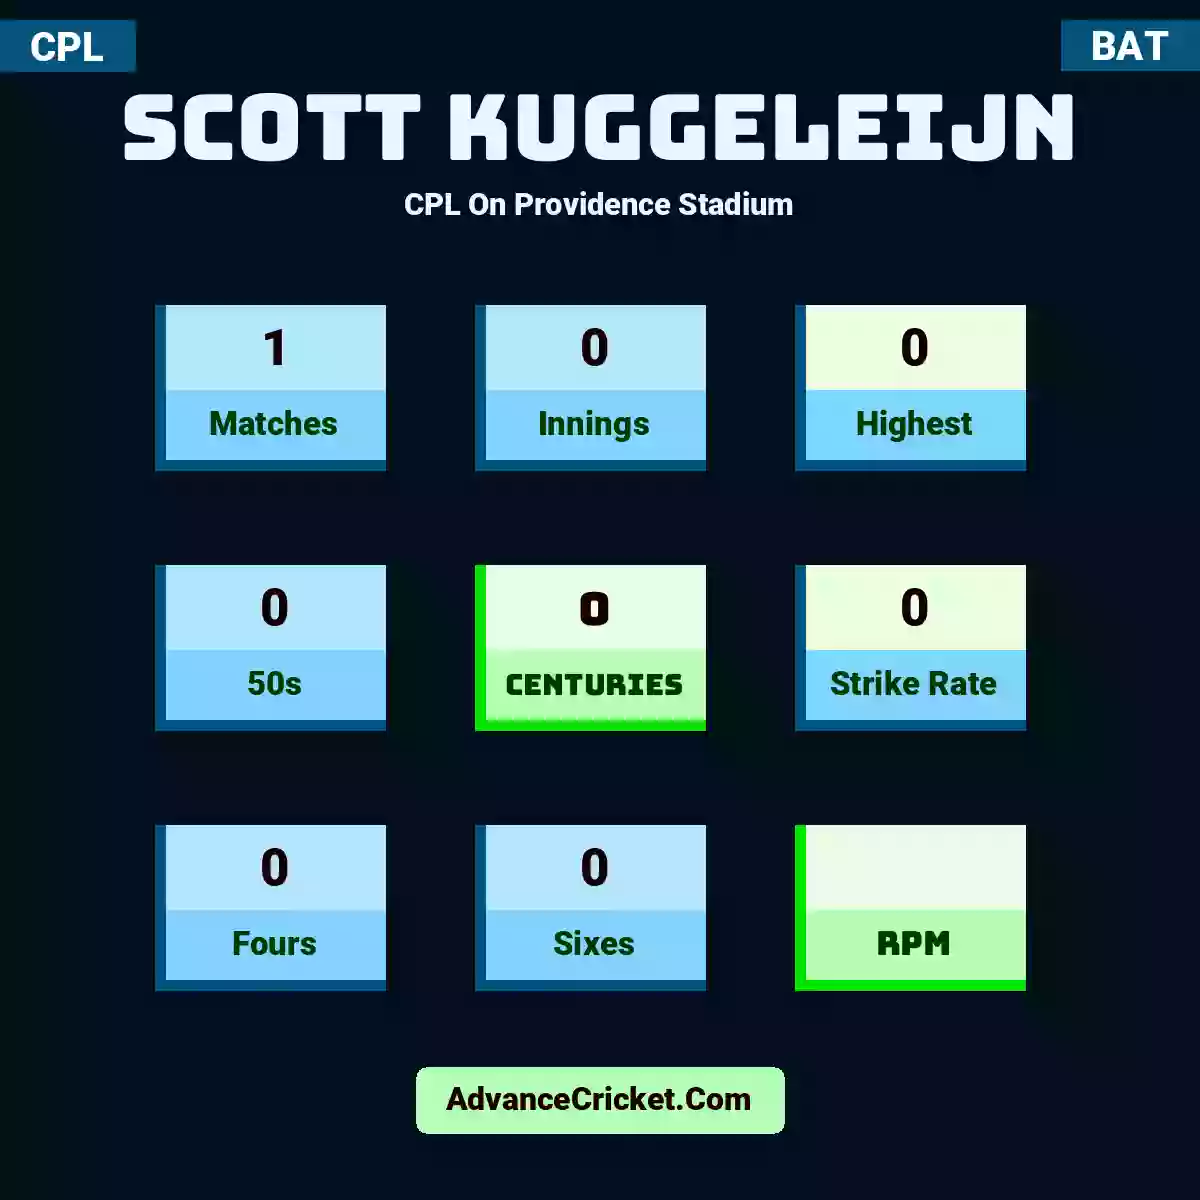 Scott Kuggeleijn CPL  On Providence Stadium, Scott Kuggeleijn played 1 matches, scored 0 runs as highest, 0 half-centuries, and 0 centuries, with a strike rate of 0. S.Kuggeleijn hit 0 fours and 0 sixes.